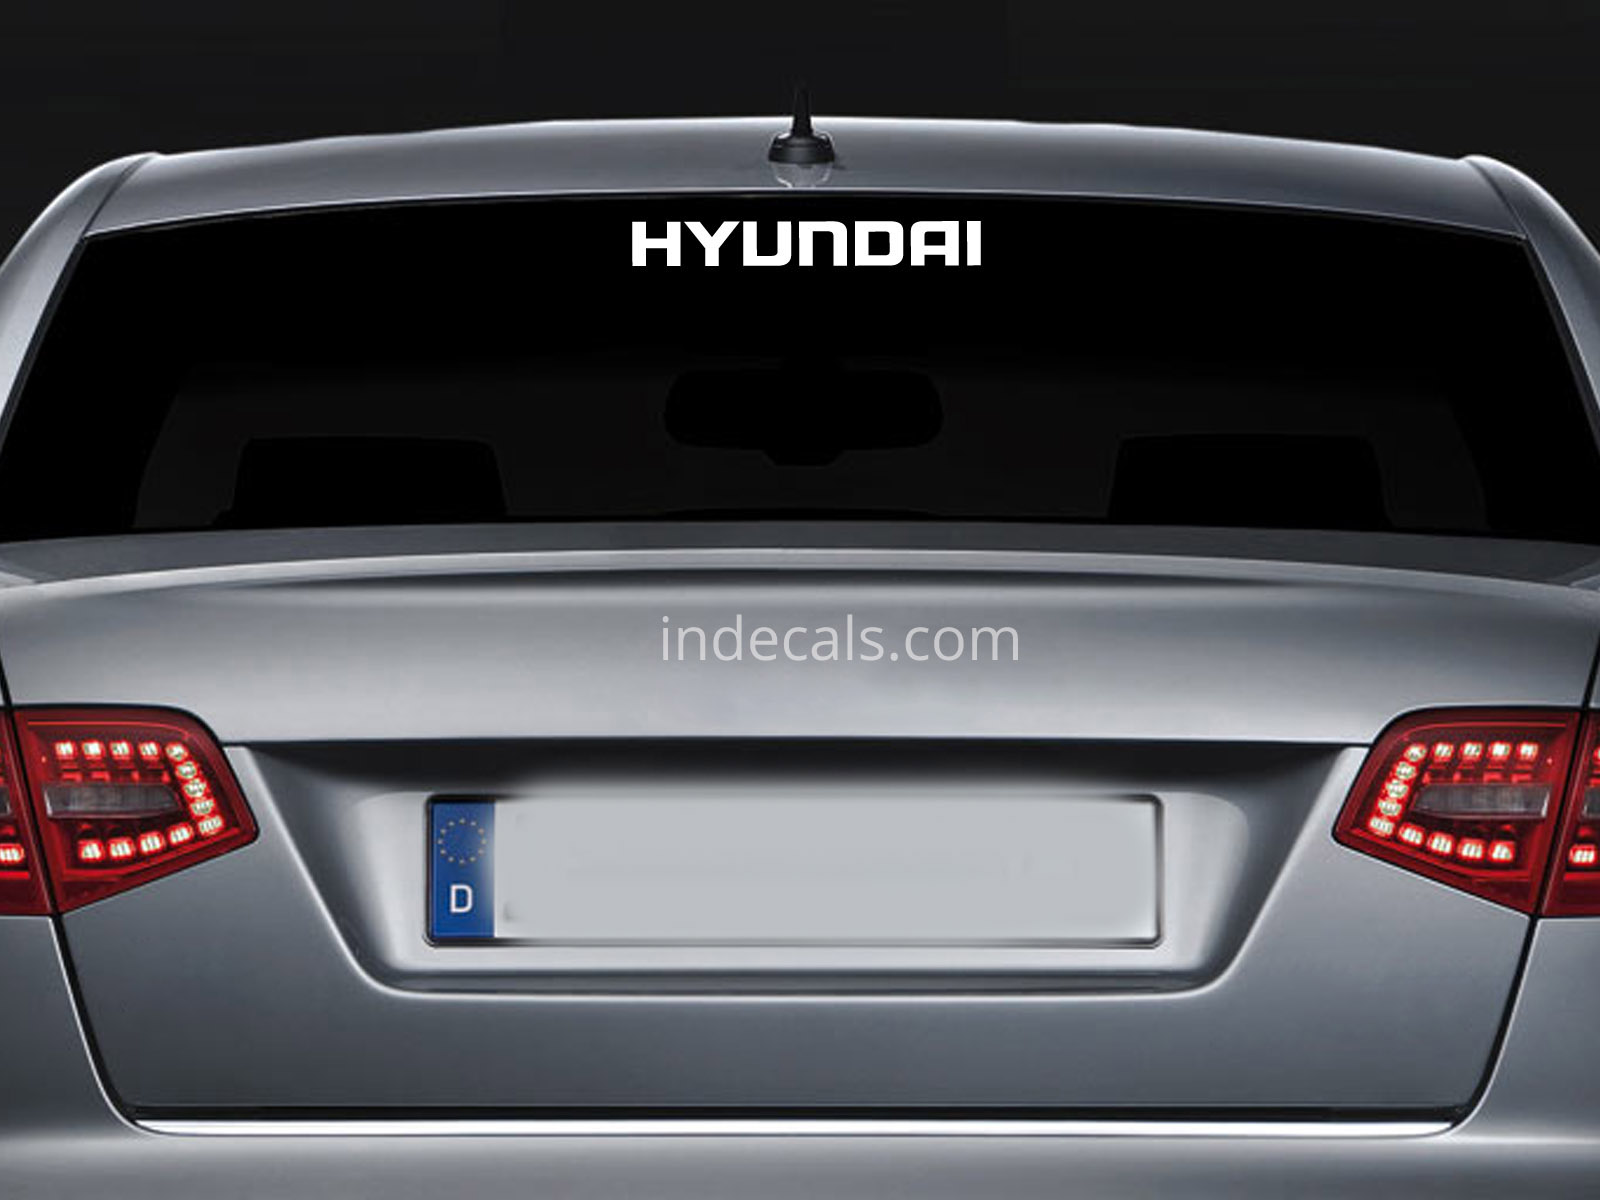 1 x Hyundai Sticker for Windshield or Back Window - White